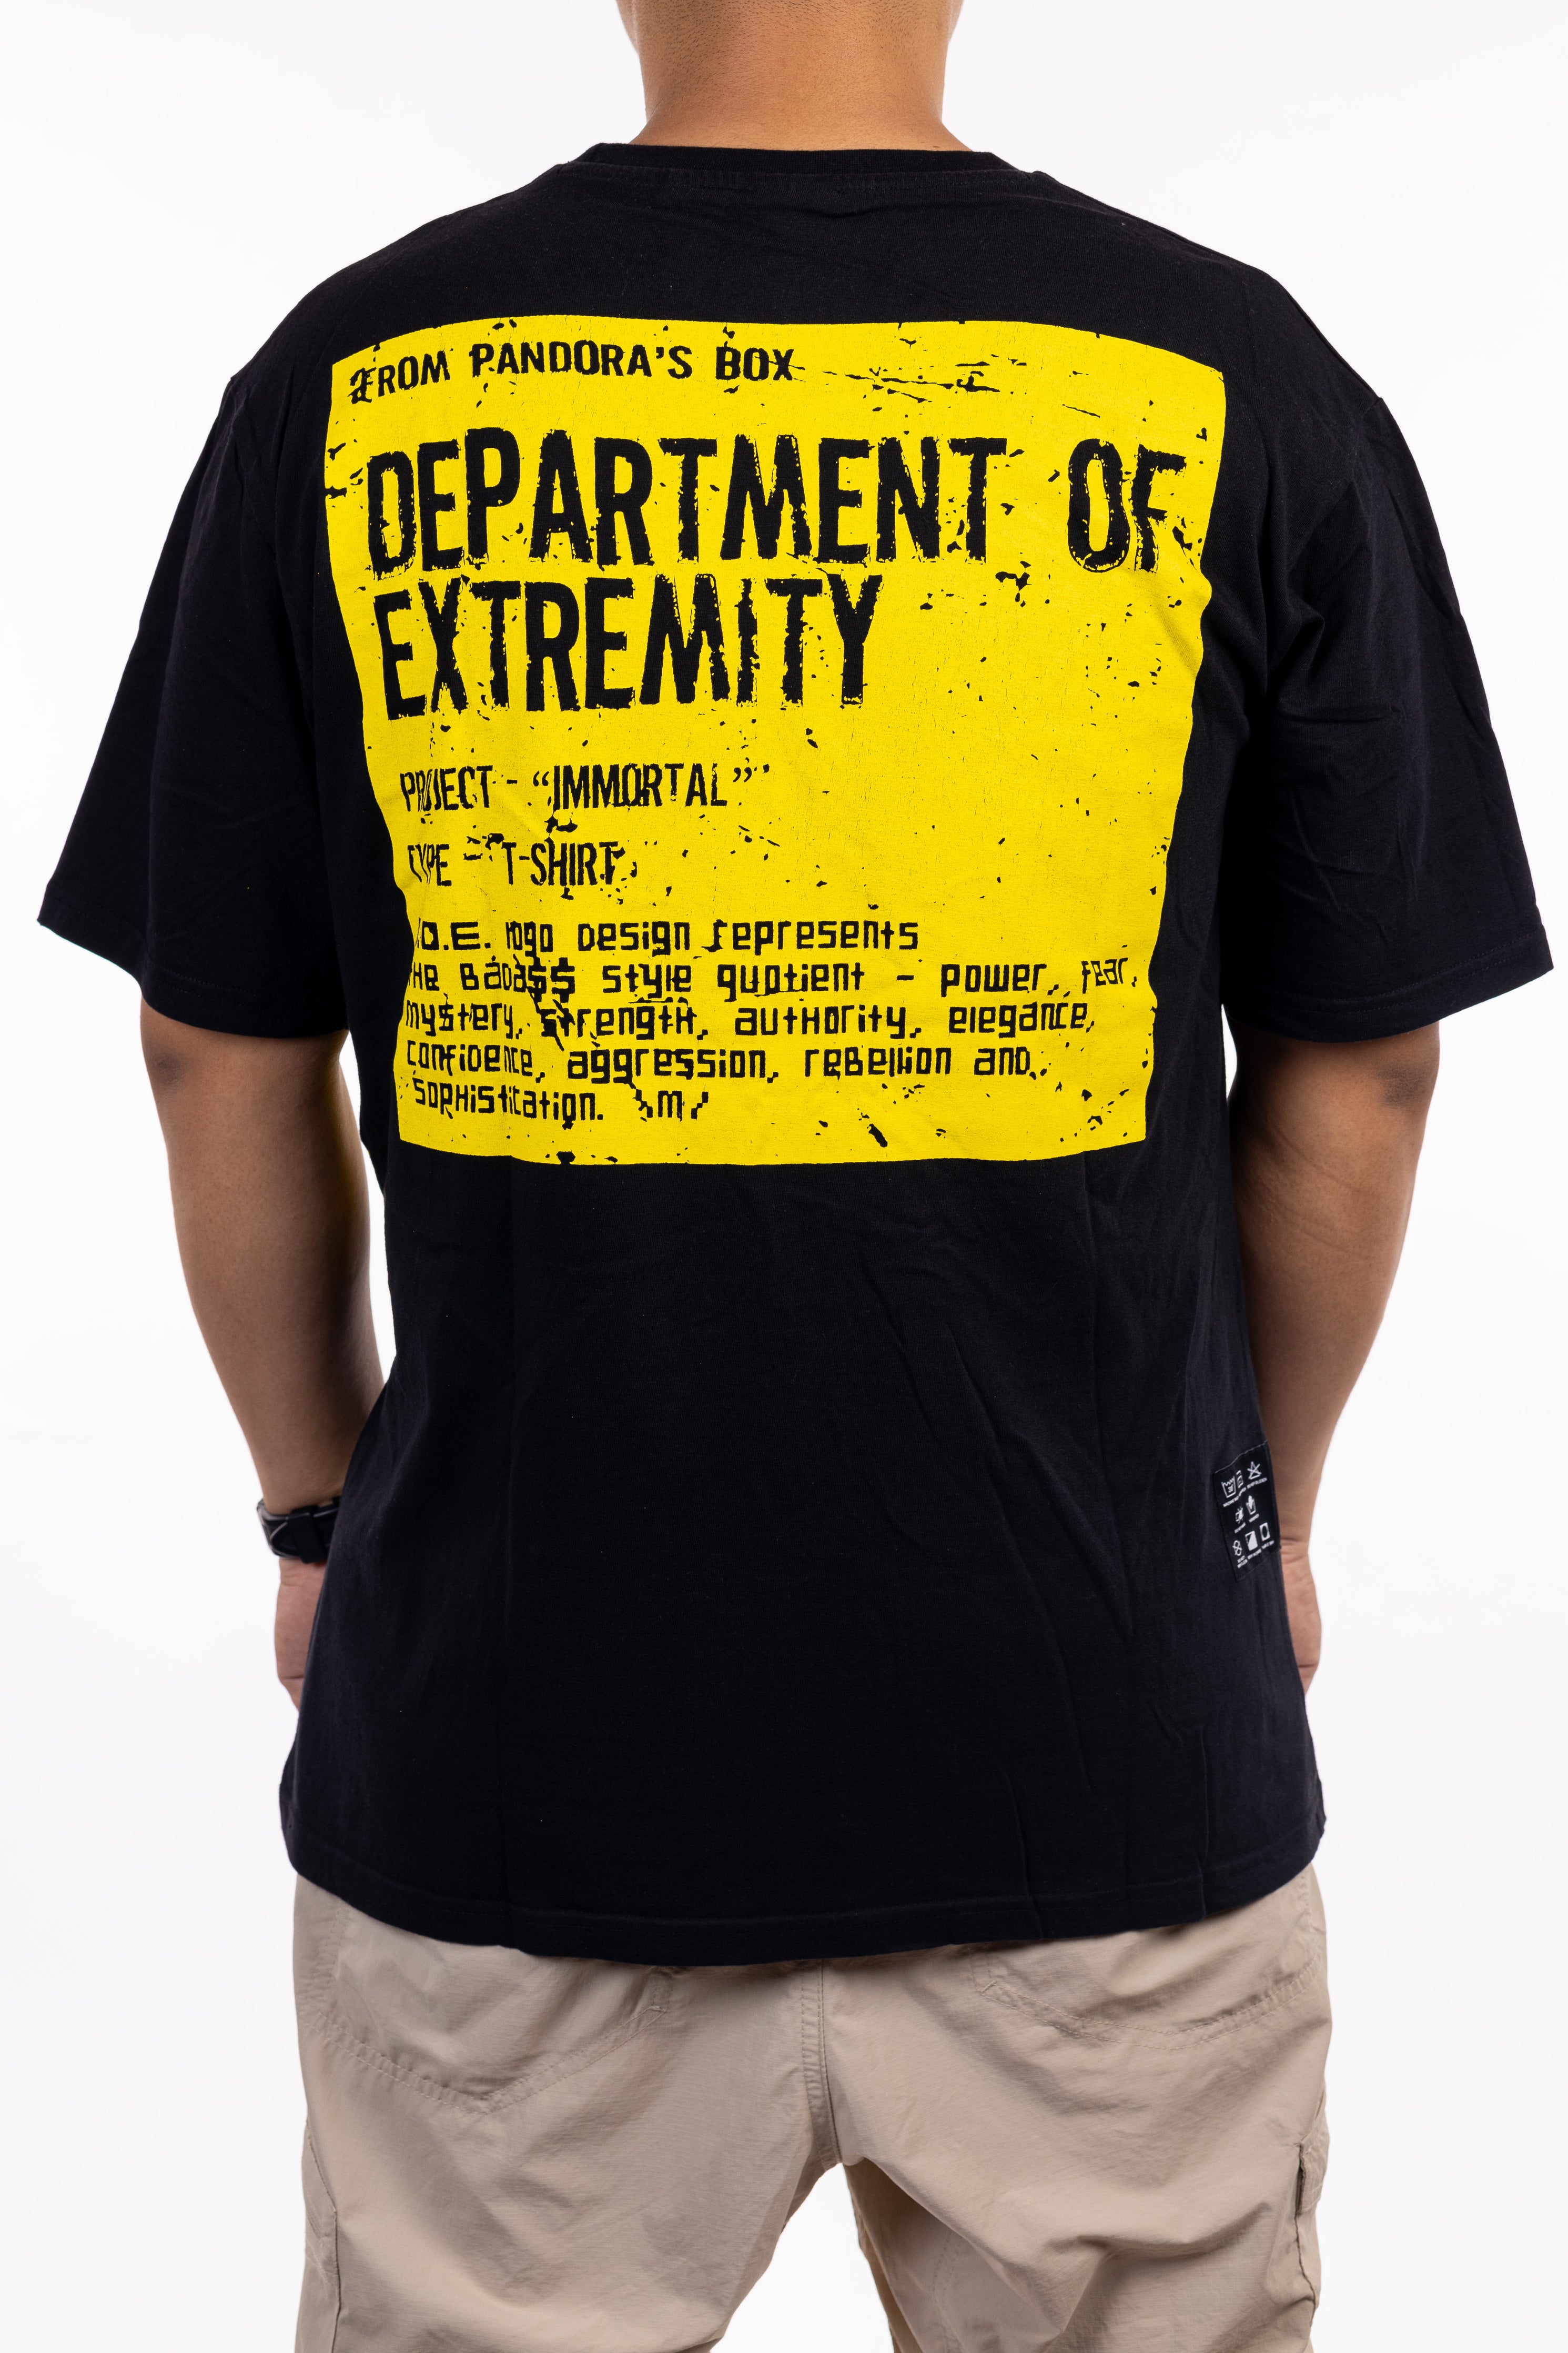 Immortal T-Shirt - DepartmentOfExtremity